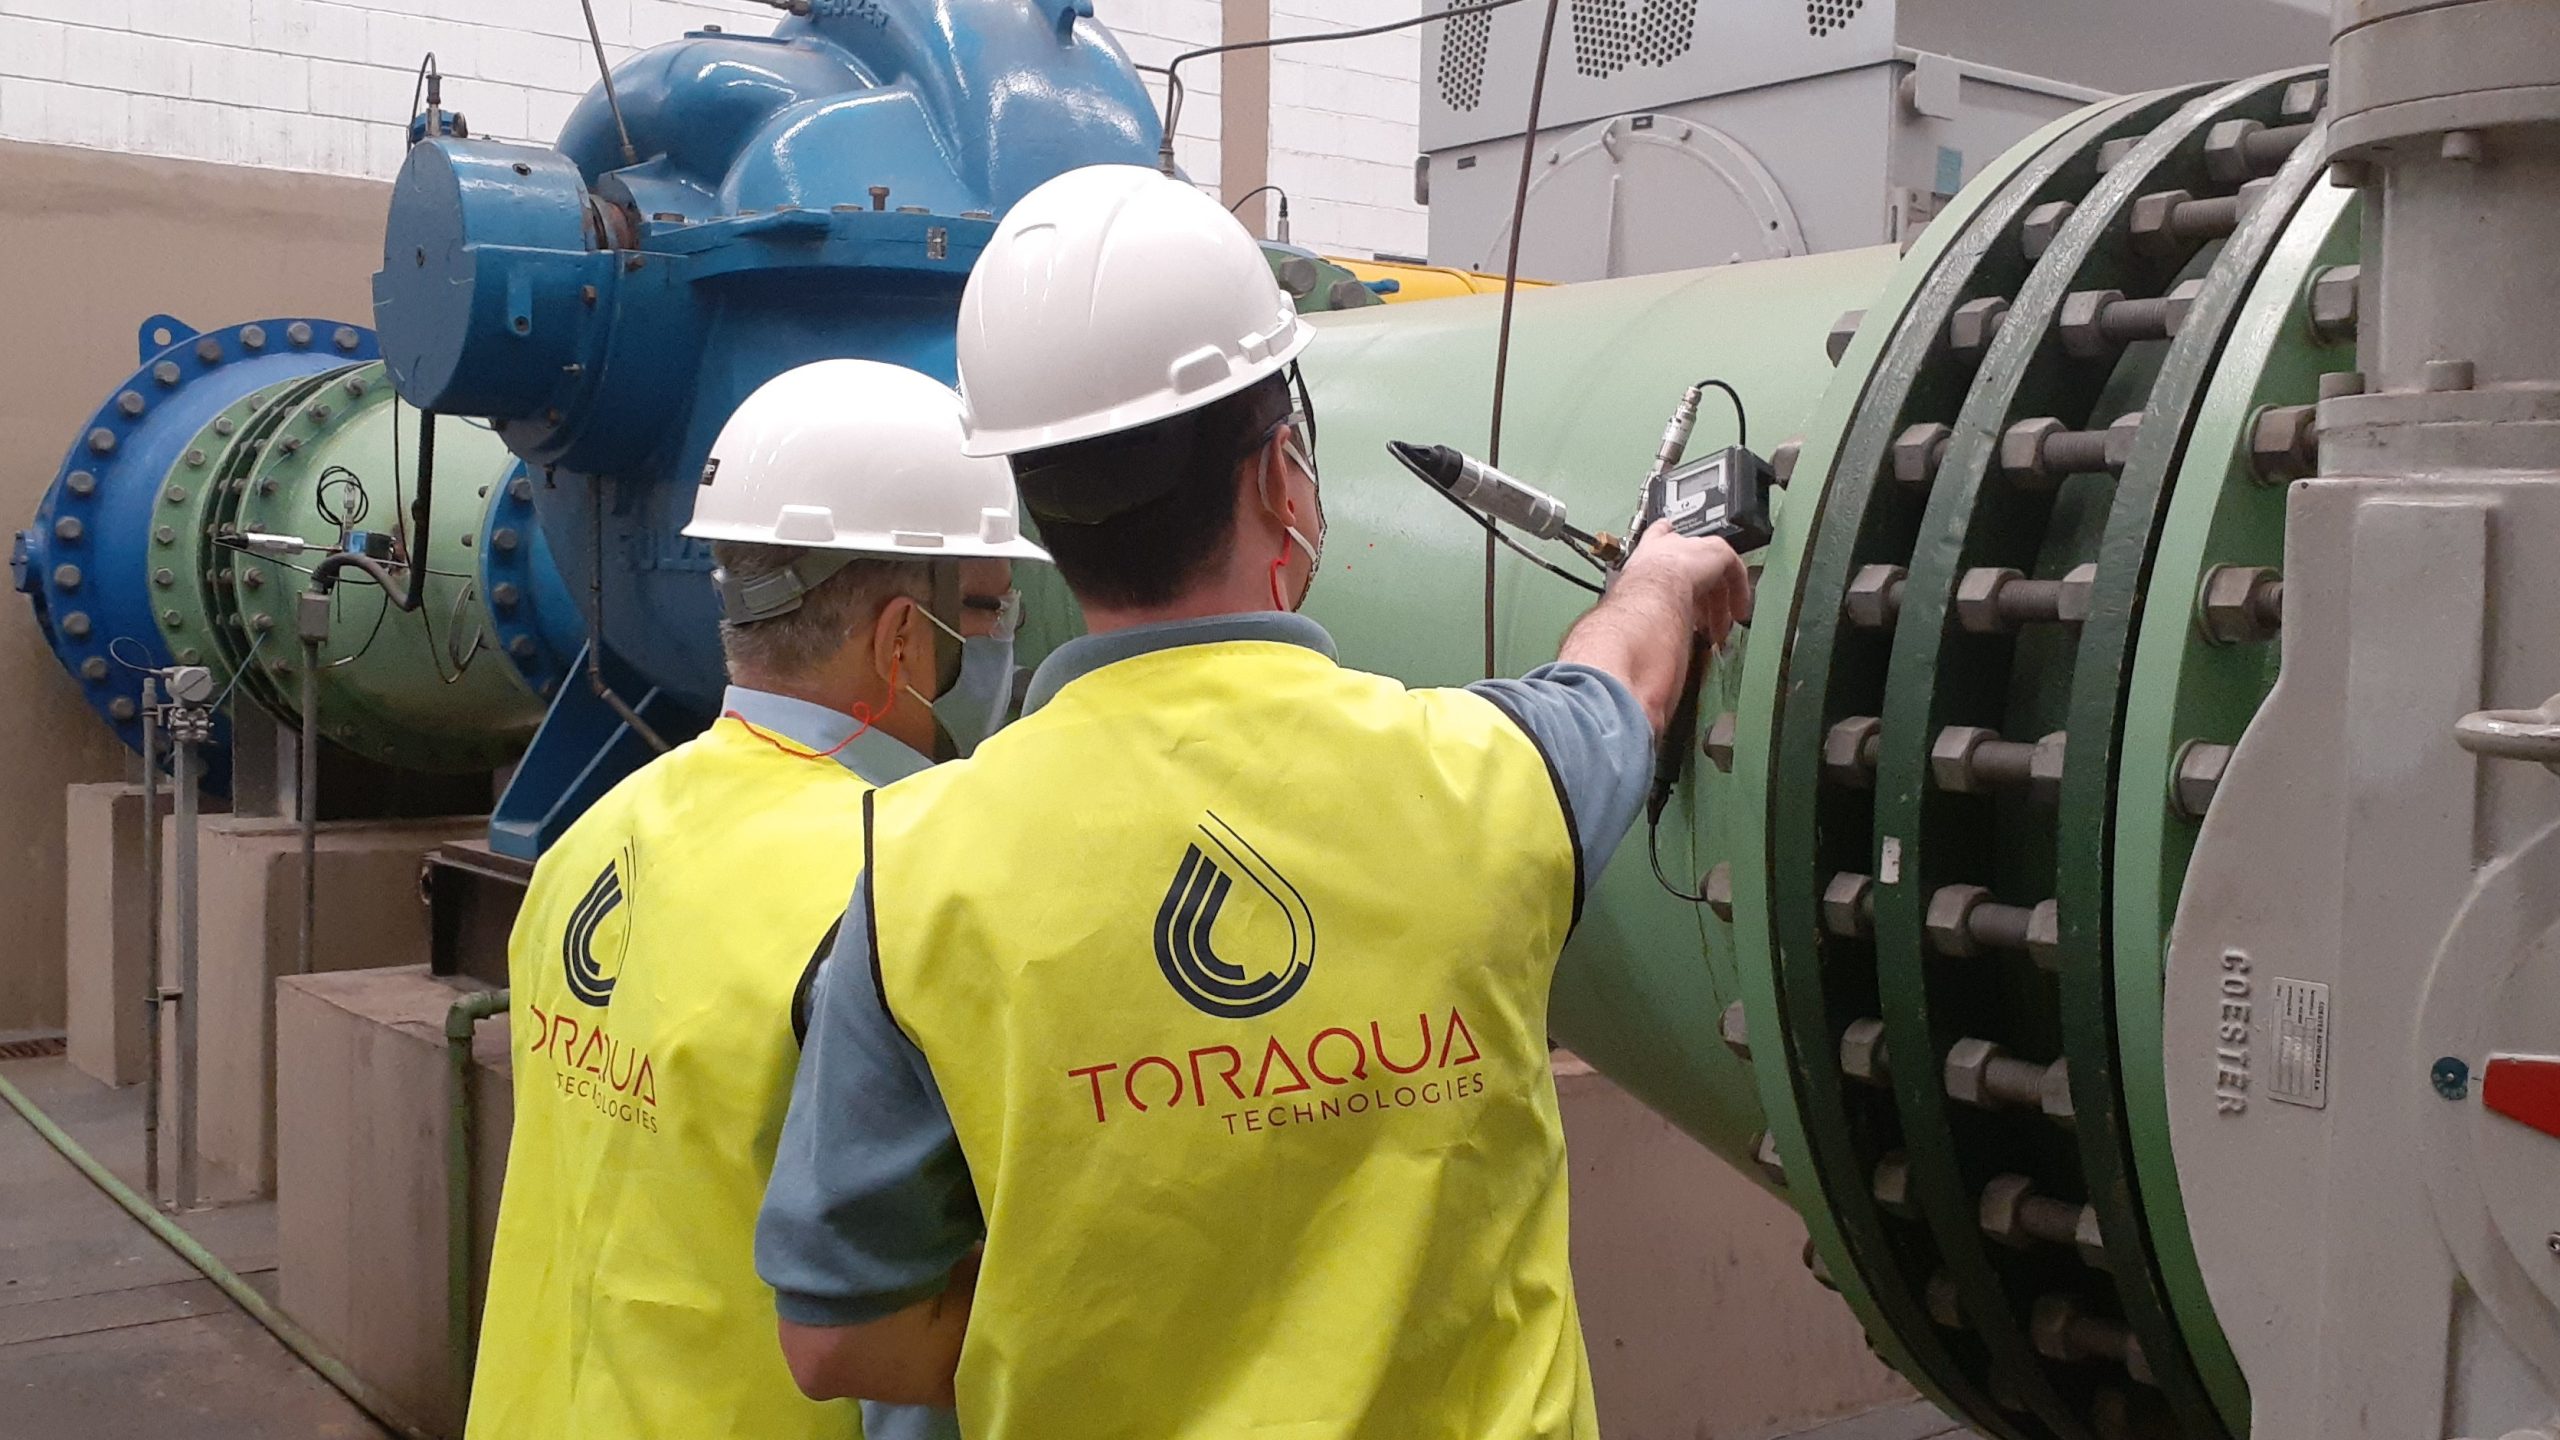 In Brazil Toraqua Technologies report significant interest in Riventa's pump monitoring technology